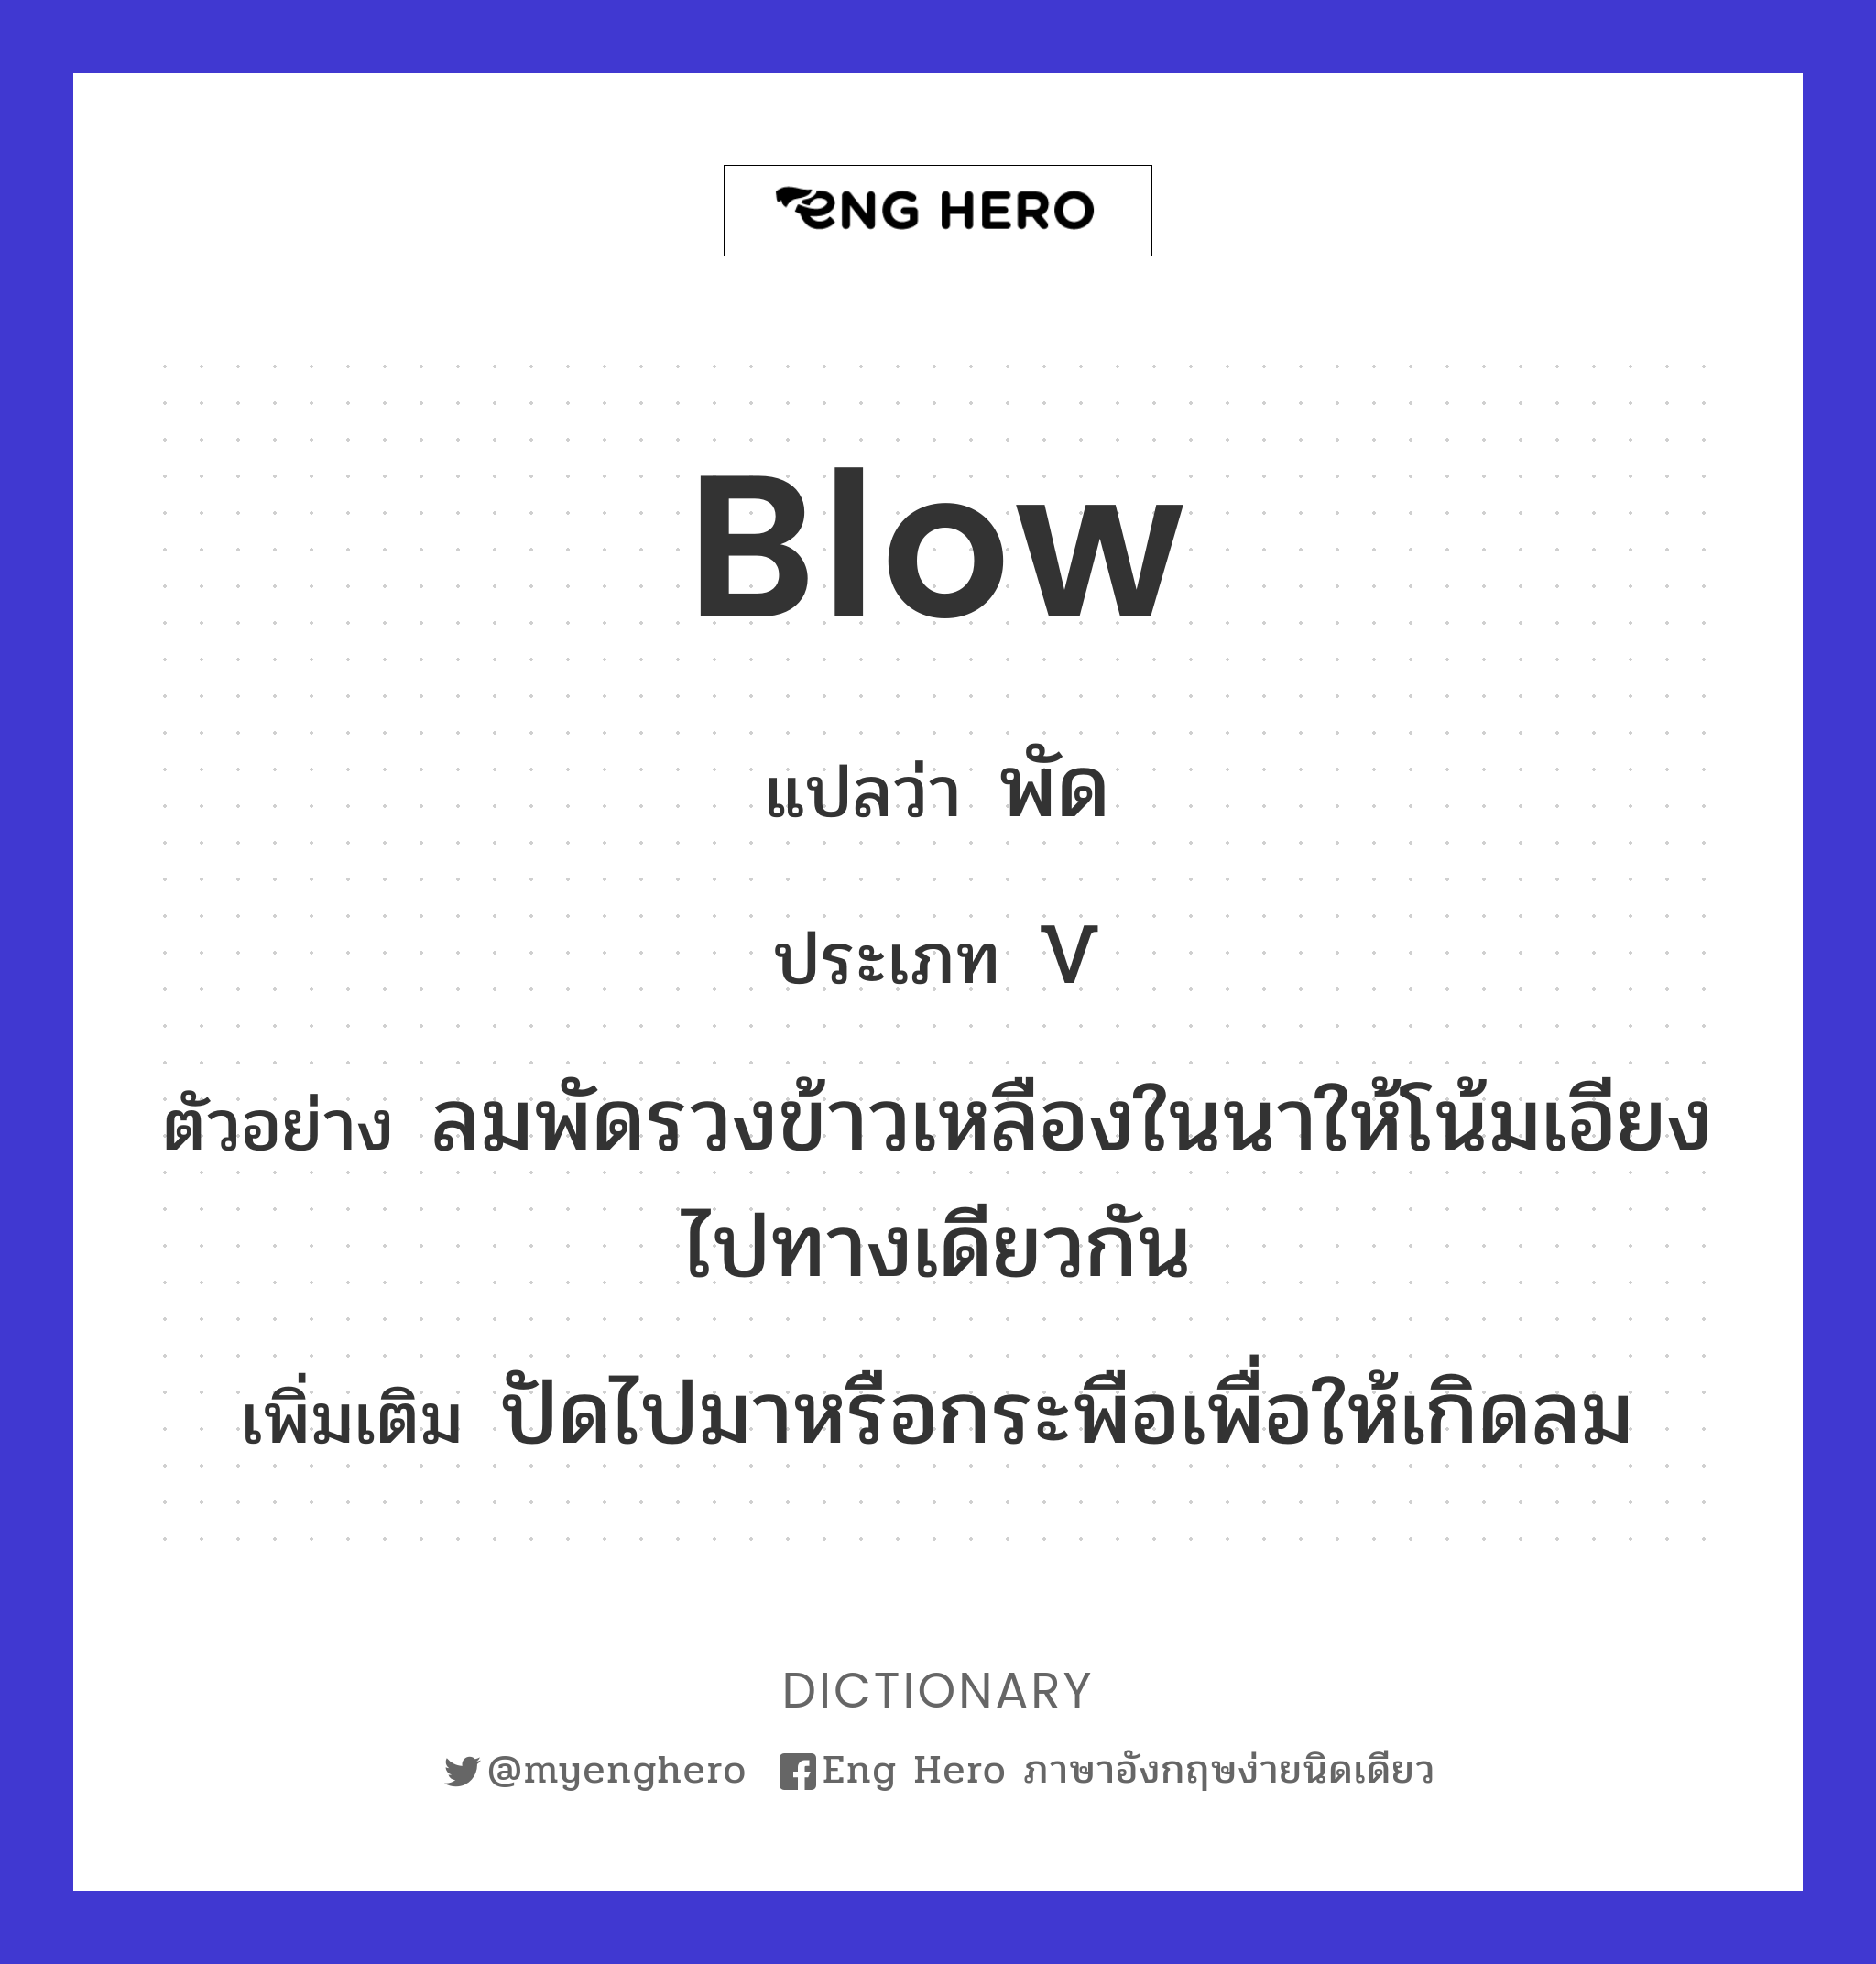 blow